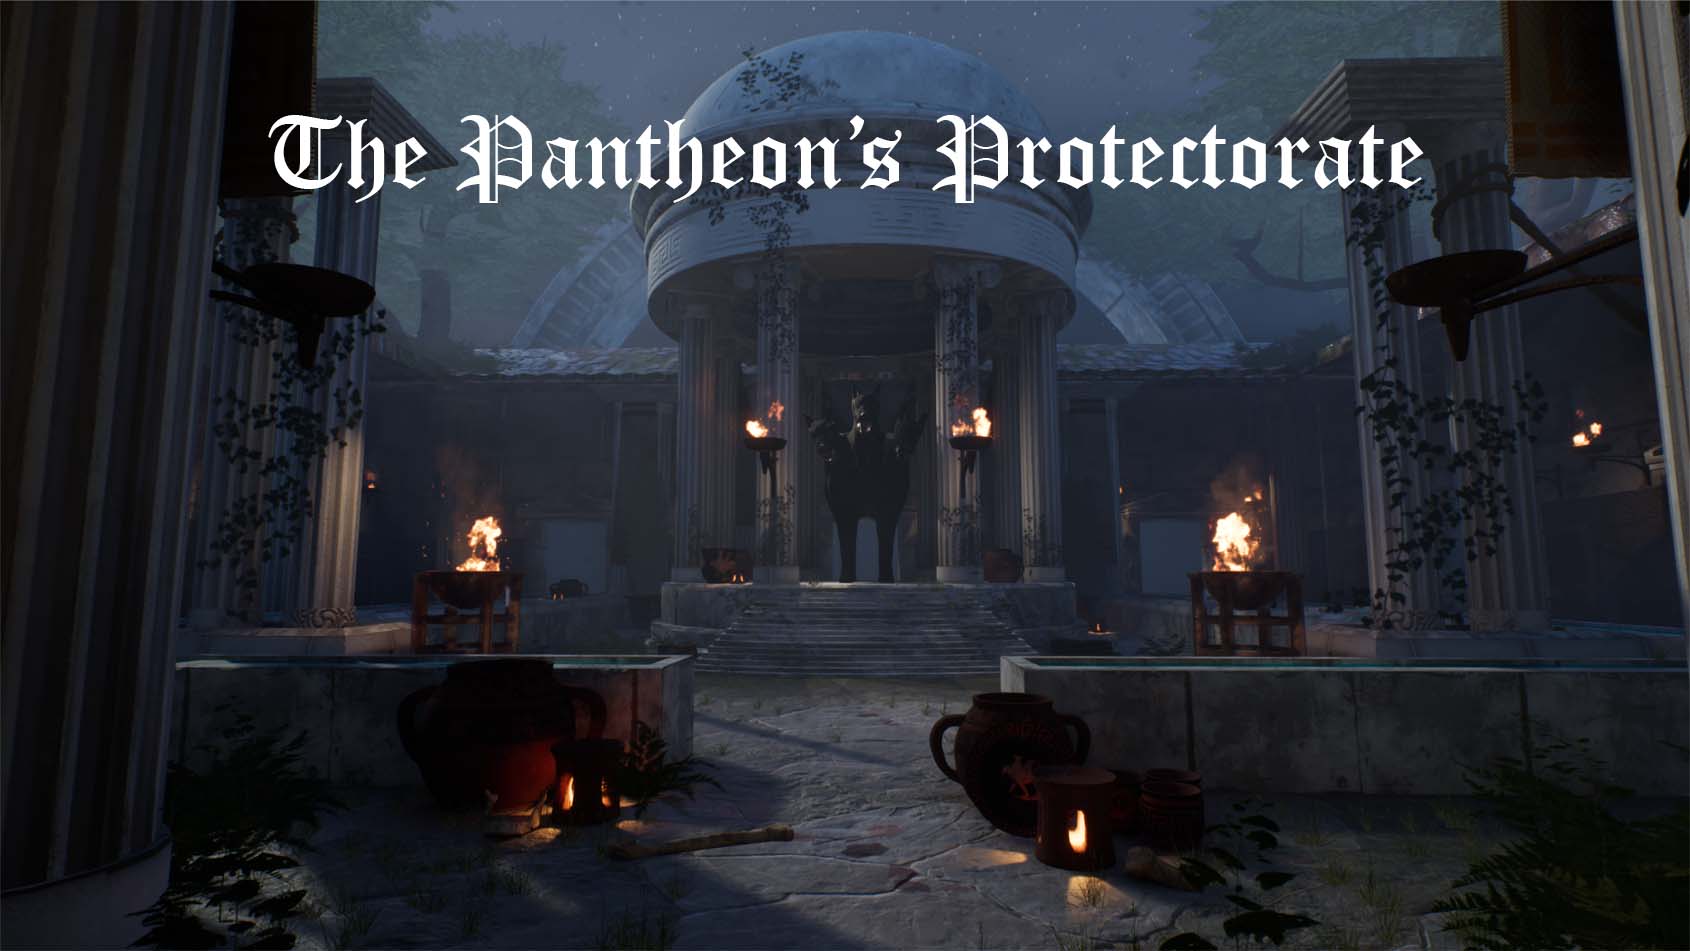 The Pantheons Protectorate.